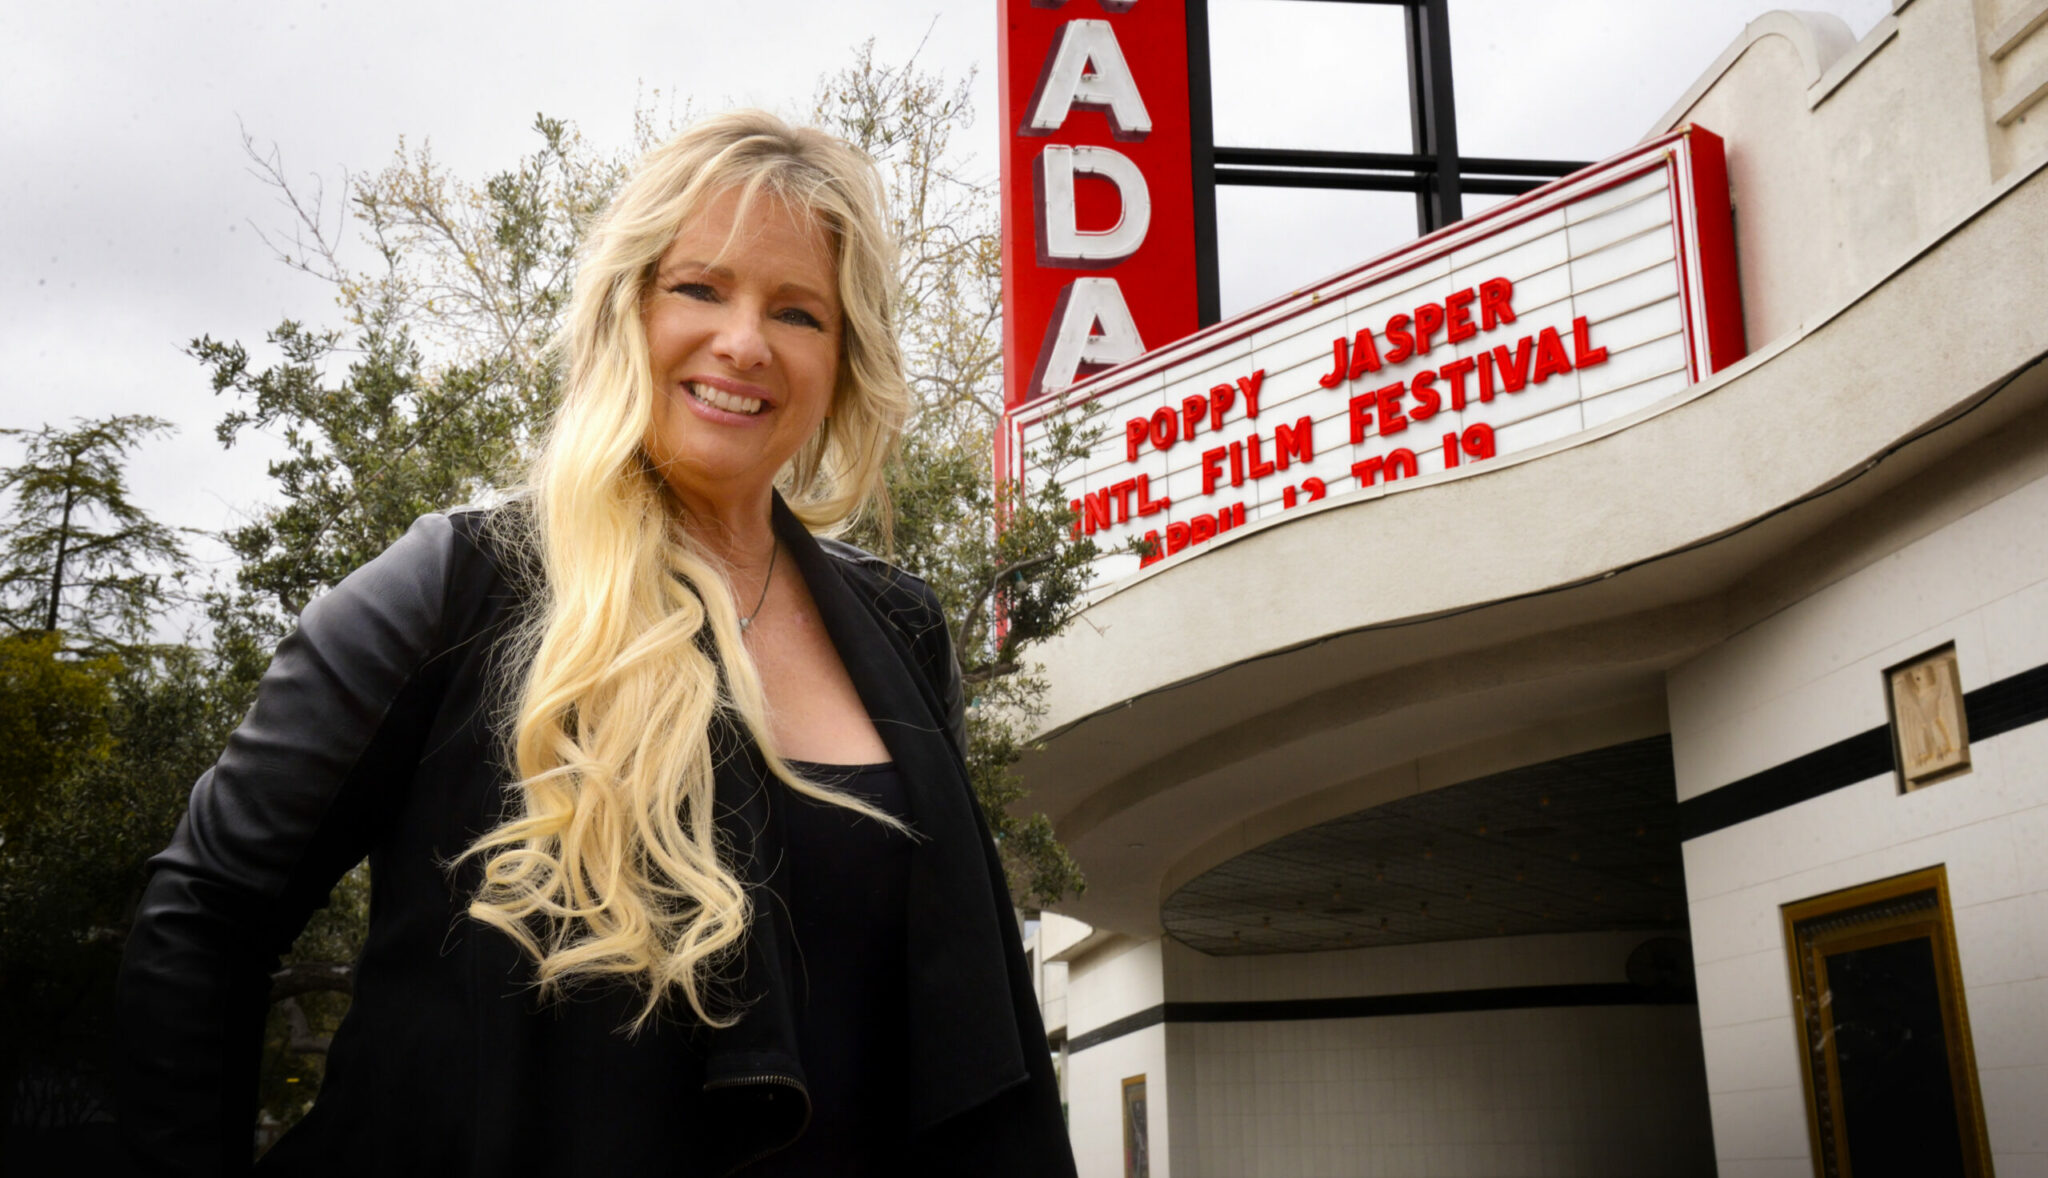 Poppy Jasper International Film Festival Opens in South County Metro